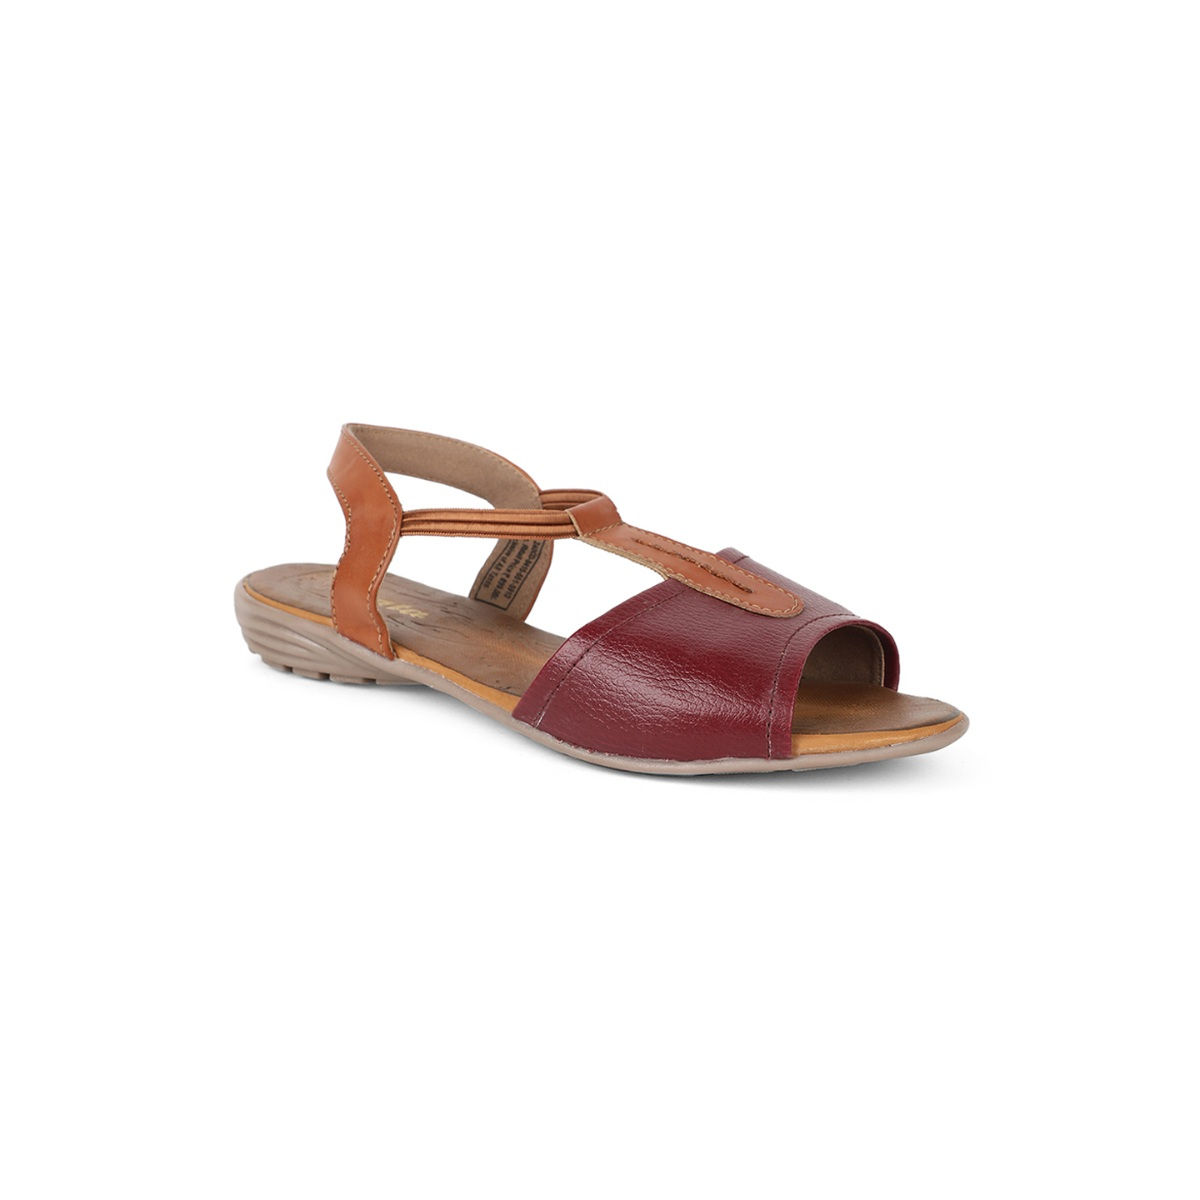 Buy Bata Bata Men Velcro Comfort Sandals at Redfynd